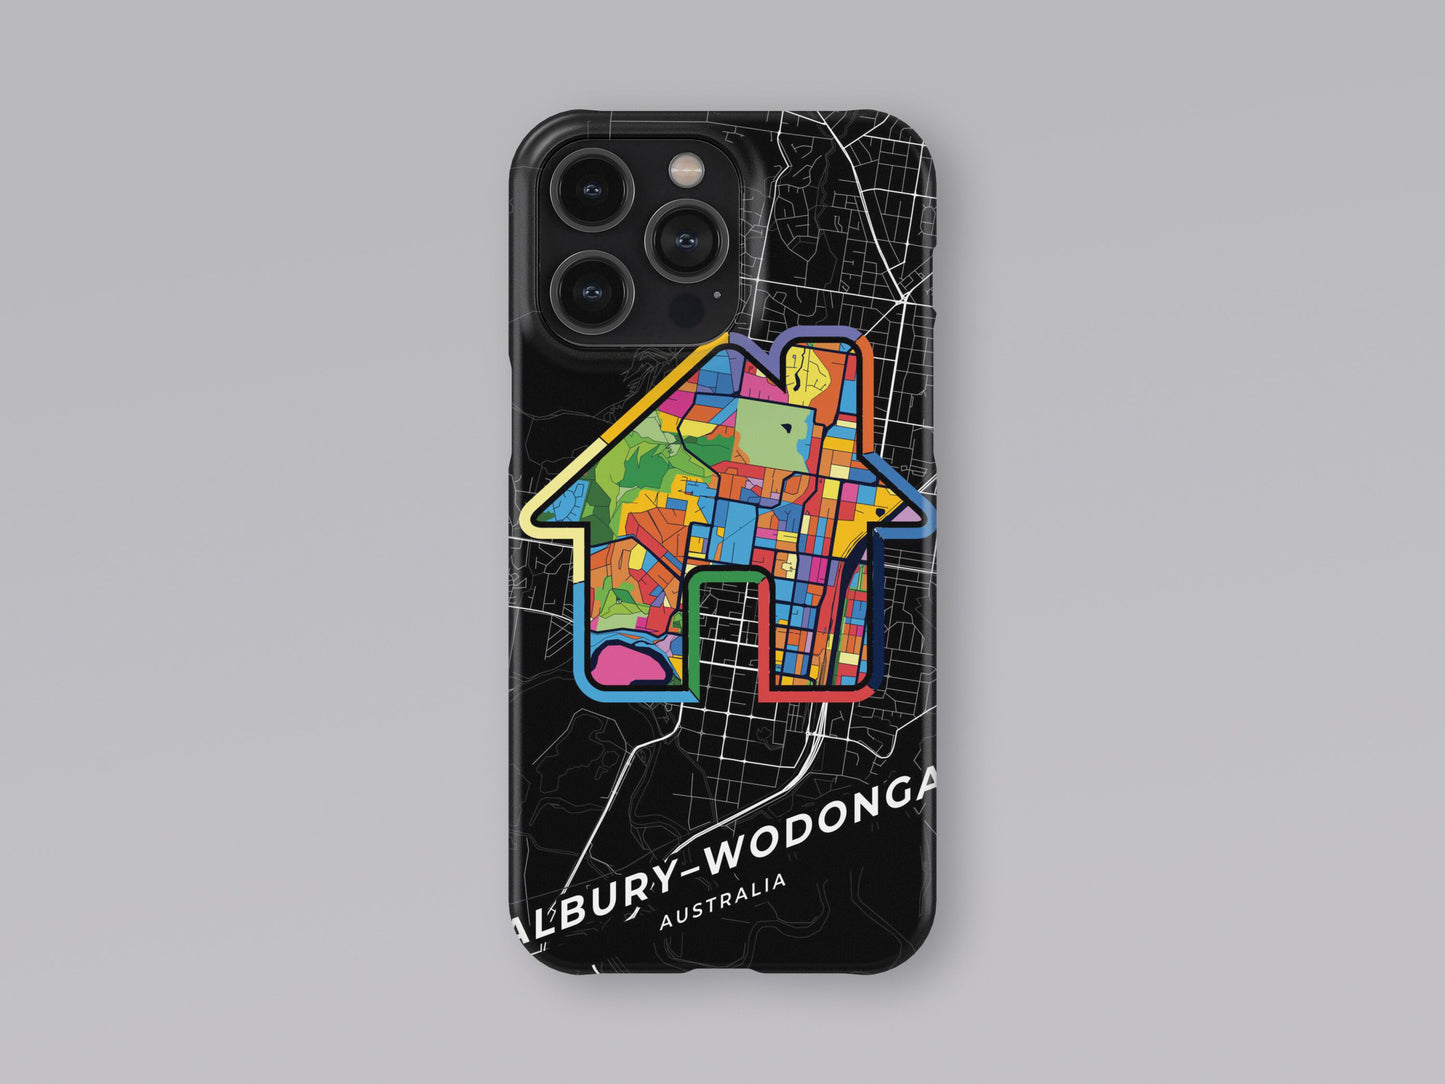 Albury–Wodonga Australia slim phone case with colorful icon. Birthday, wedding or housewarming gift. Couple match cases. 3